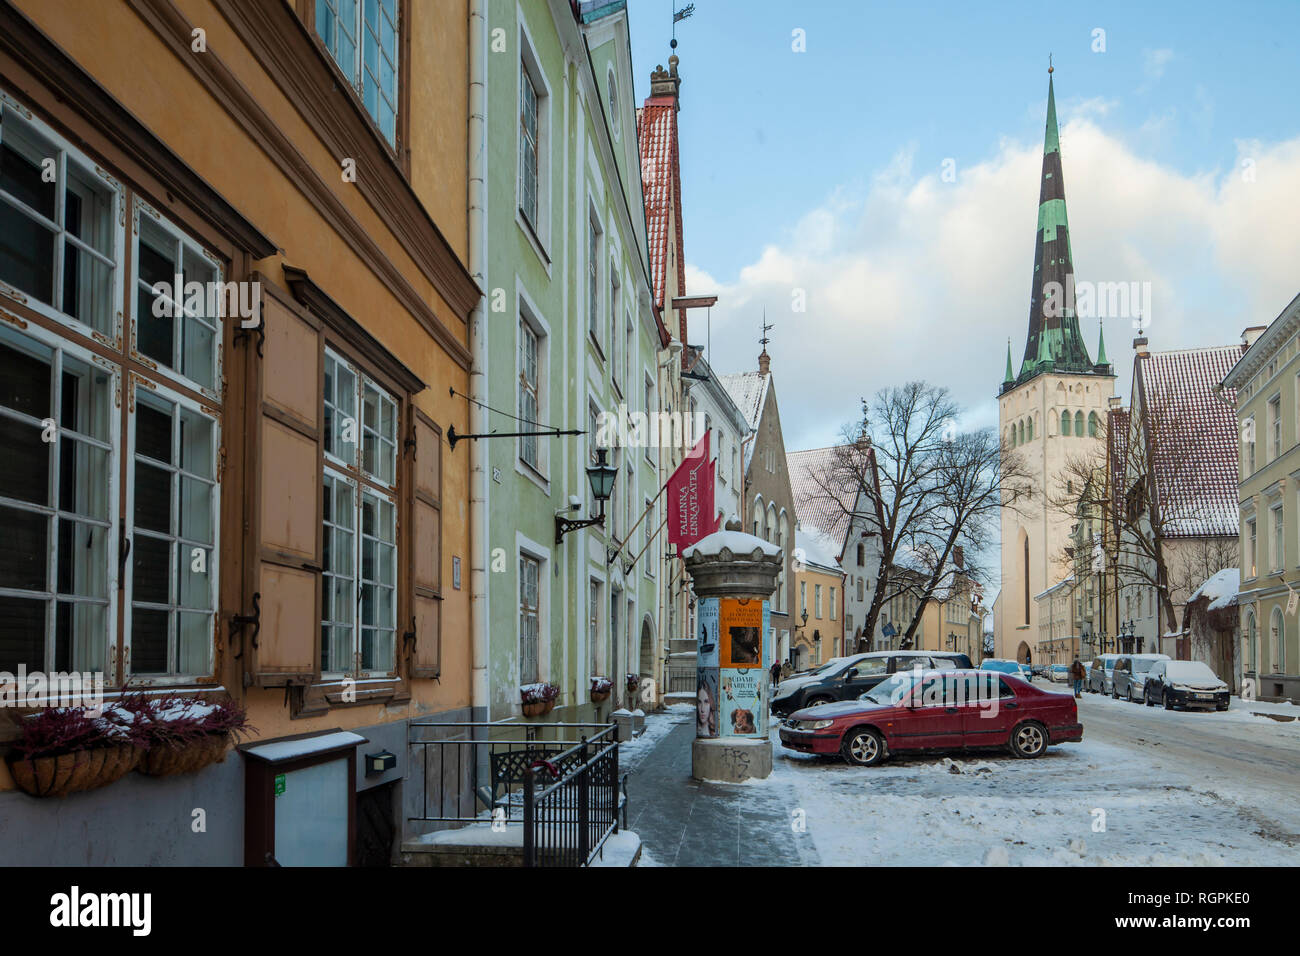 Winter day in the old town of Tallinn, Estonia. Stock Photo